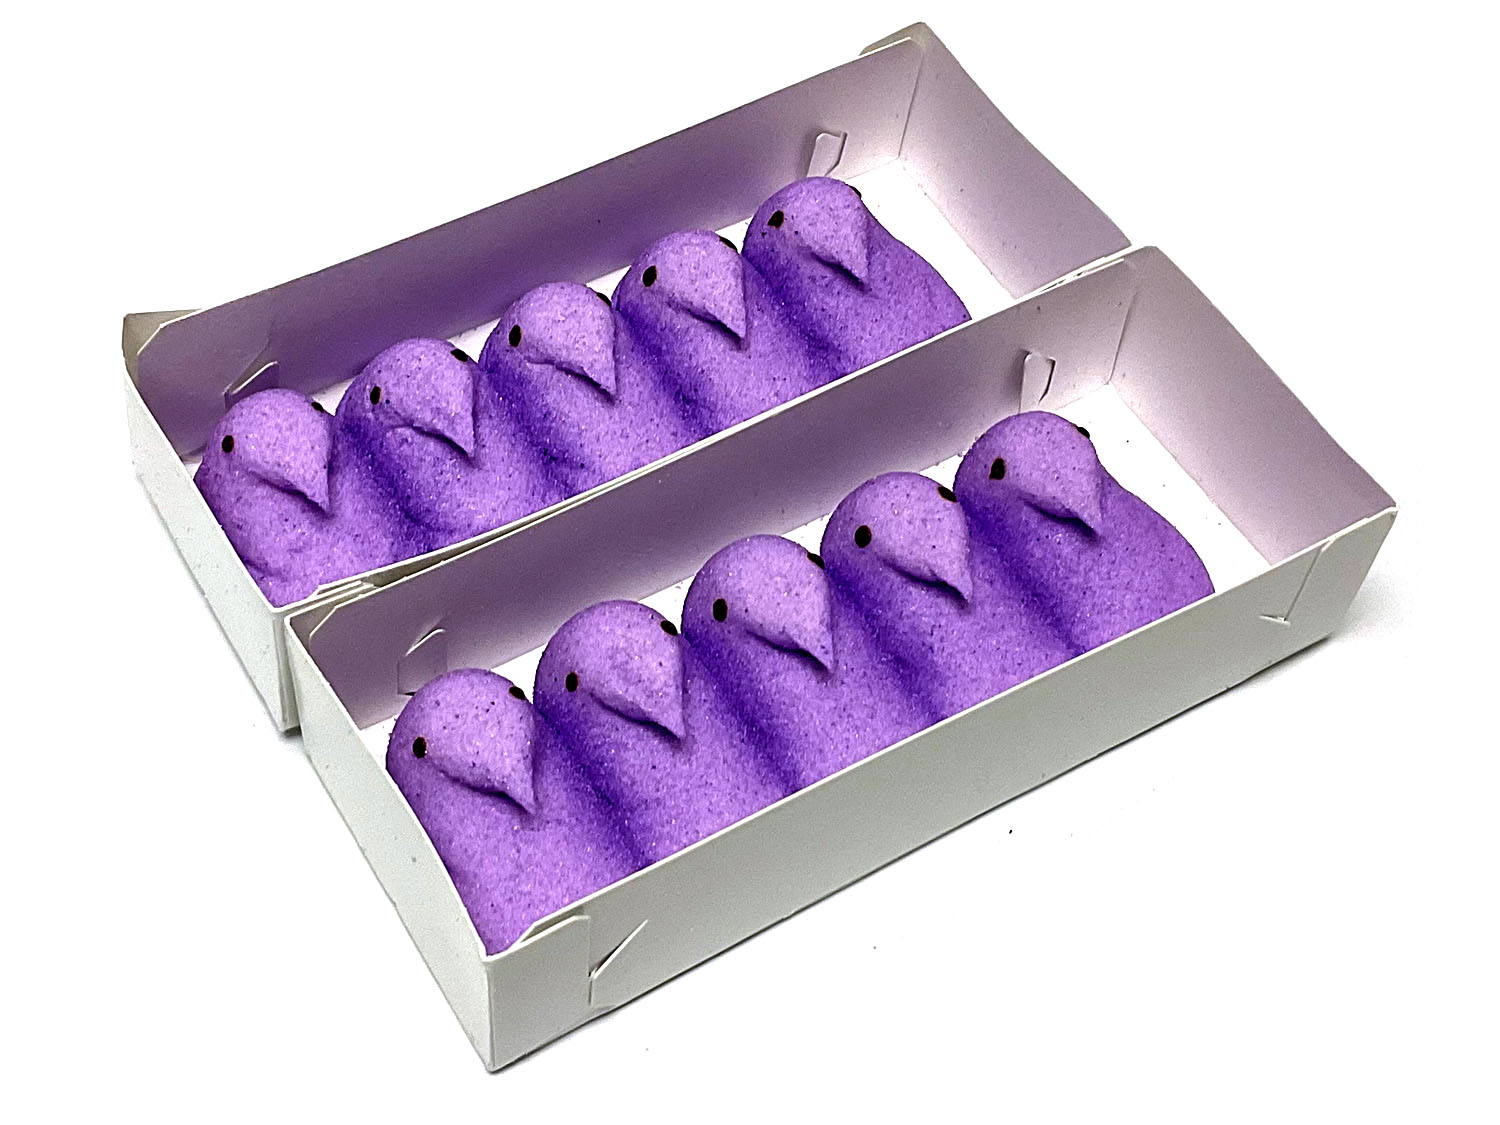 Peeps Lavender Marshmallow Chicks - 1.5 oz box of 10 unwrapped